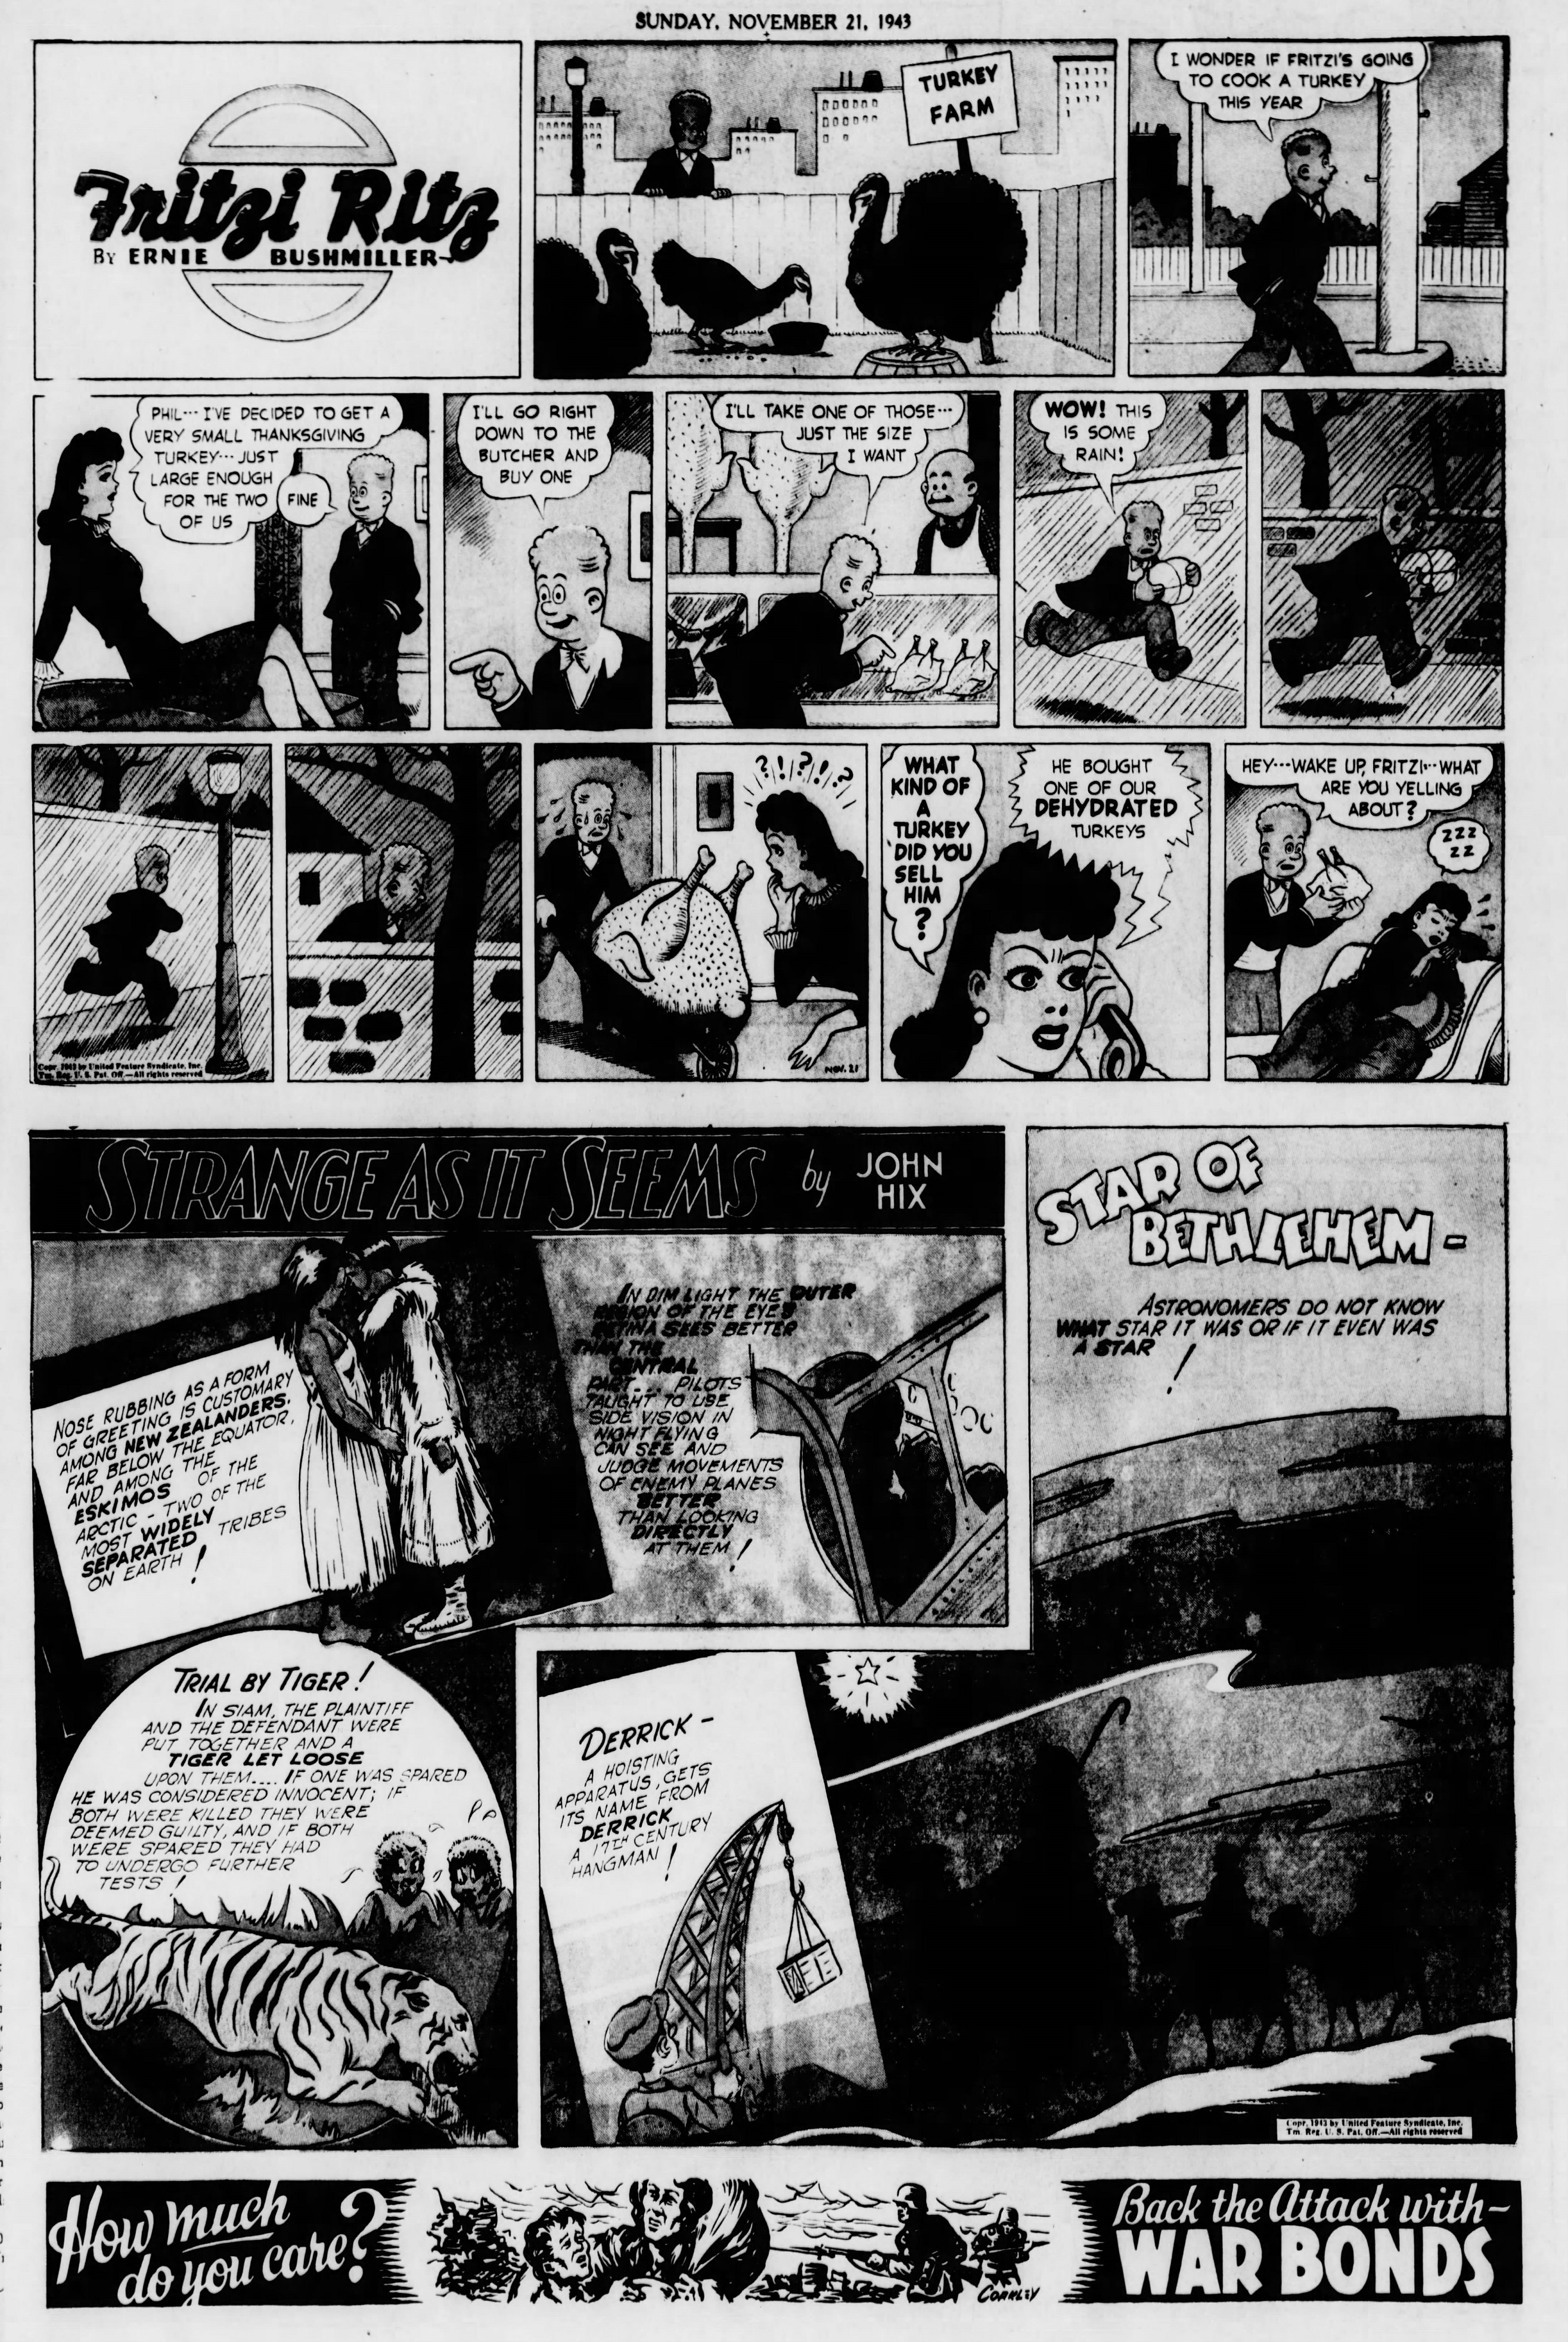 The_Brooklyn_Daily_Eagle_Sun__Nov_21__1943_(8).jpg